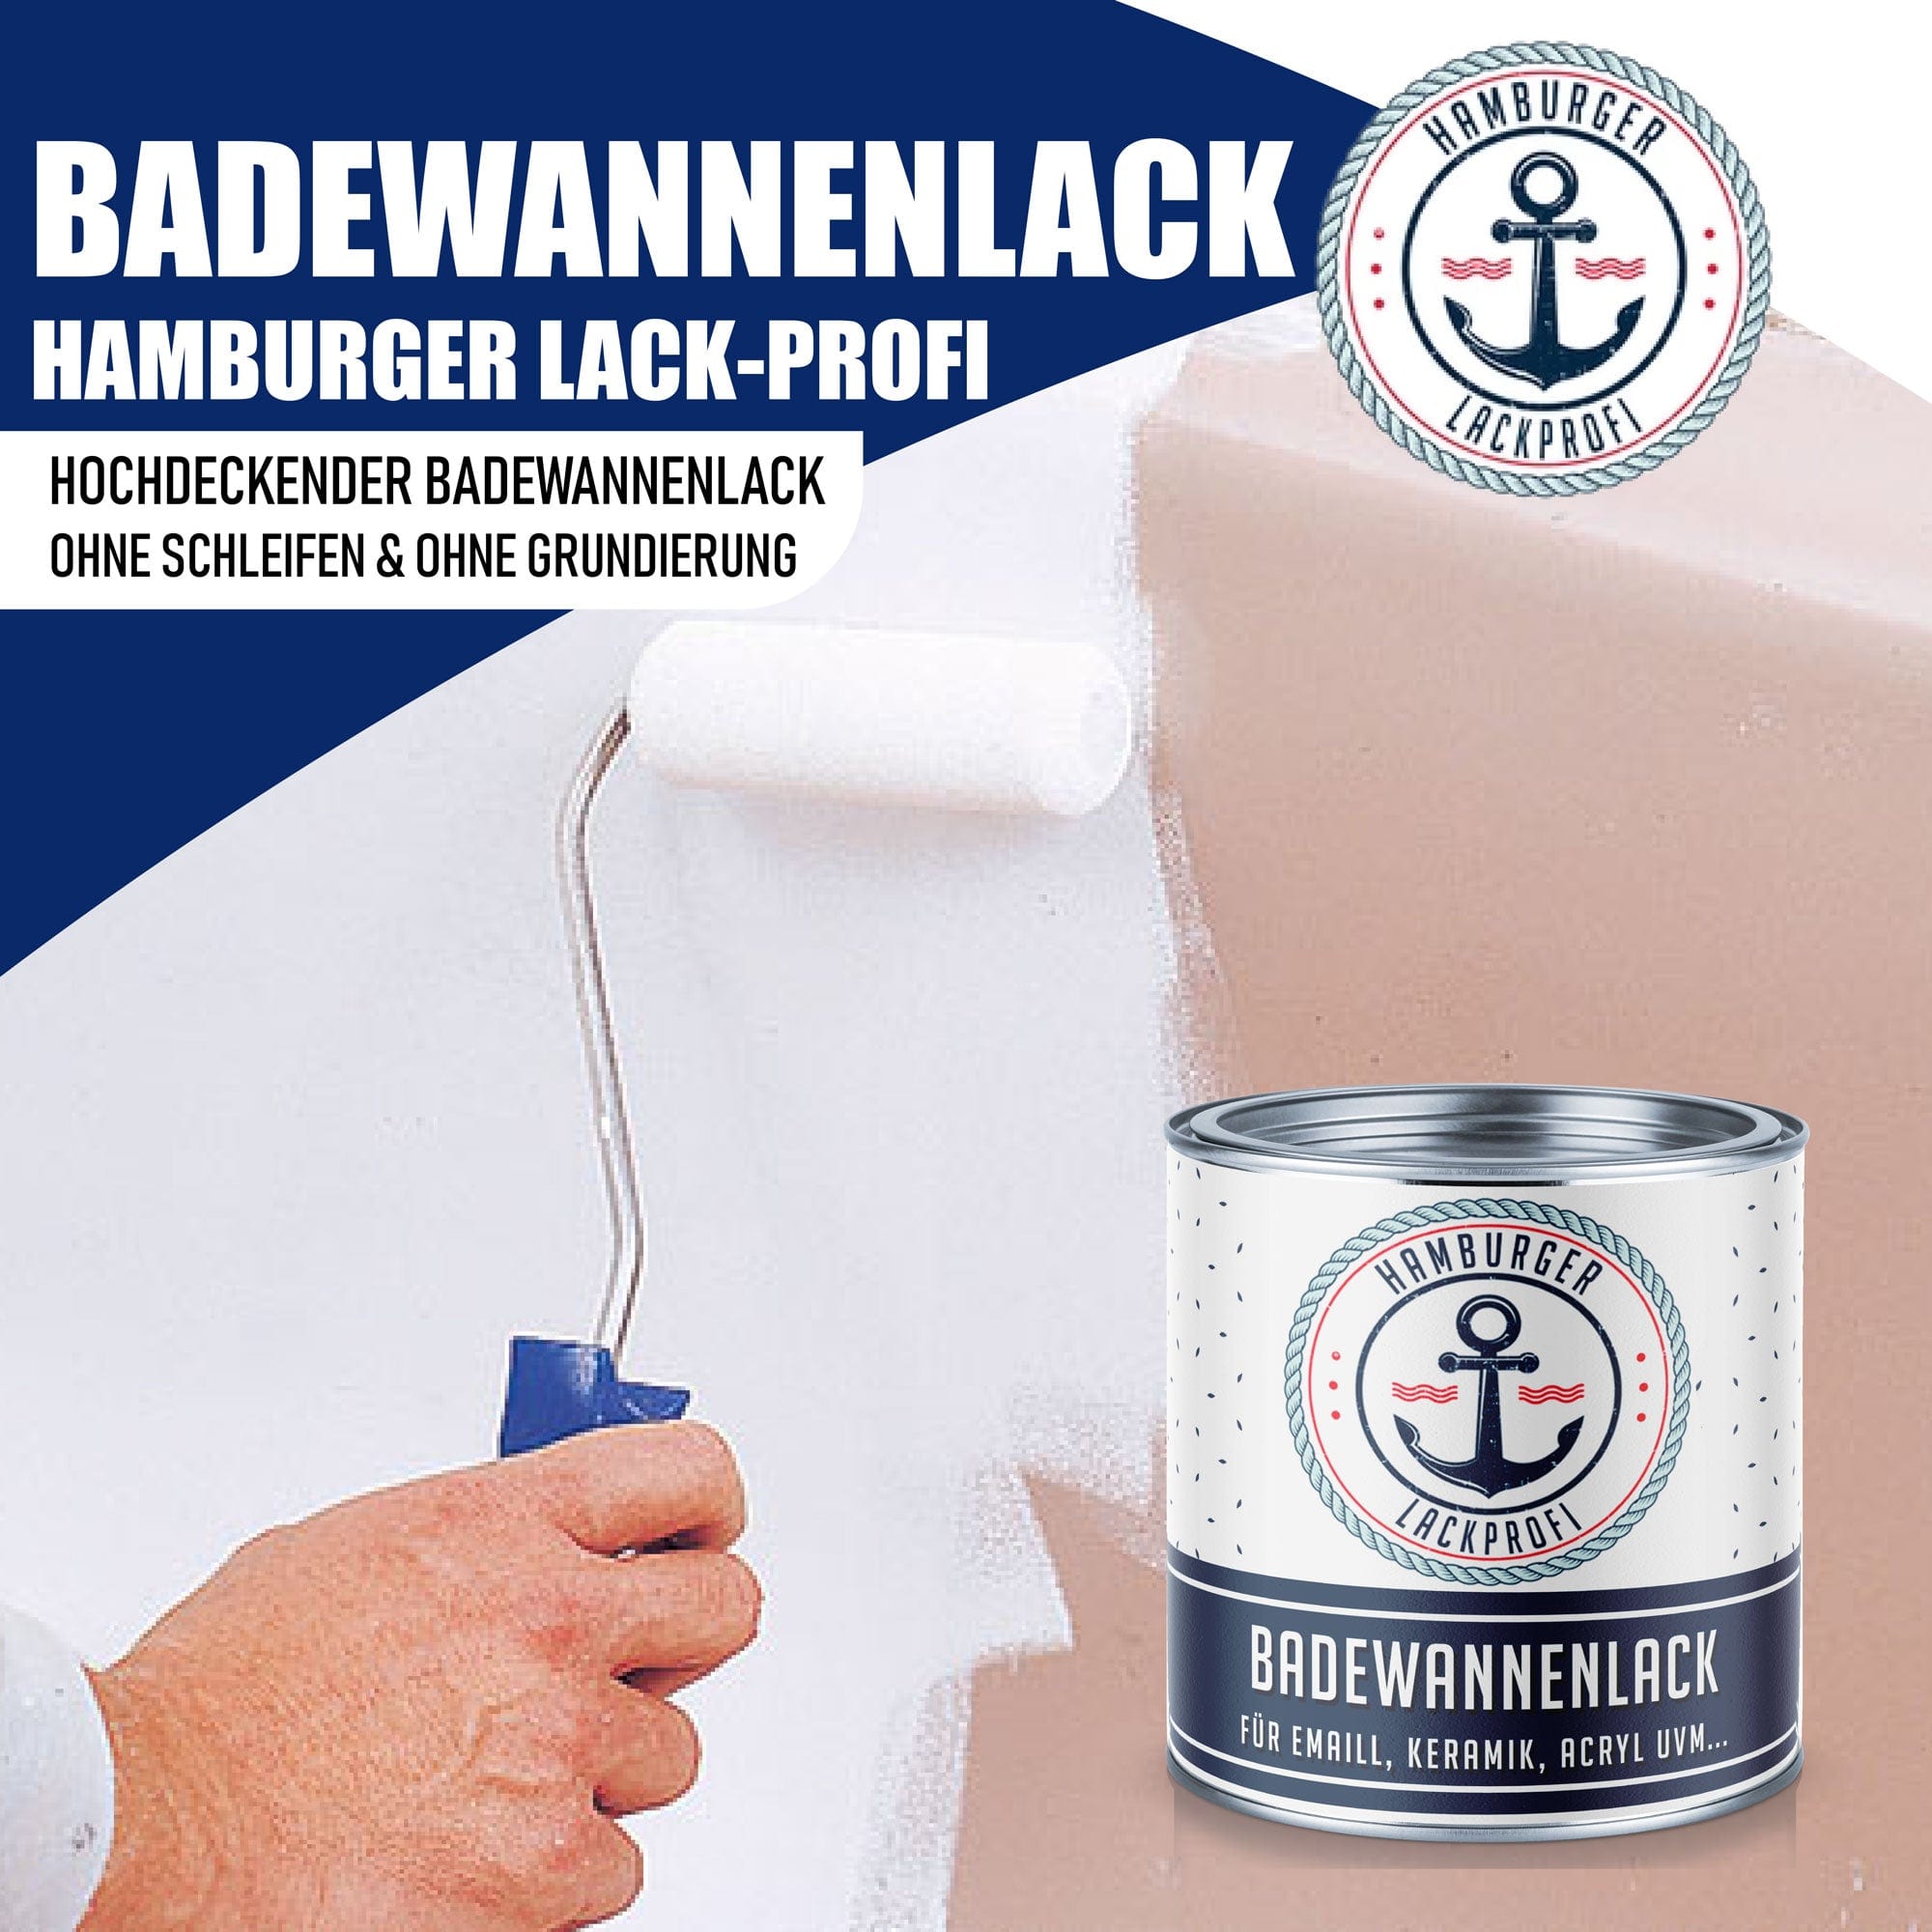 Hamburger Lack-Profi Badewannenlack Hamburger Lack-Profi 2K Badewannenlack Himmelblau RAL 5015 - Glänzend / Seidenmatt / Matt